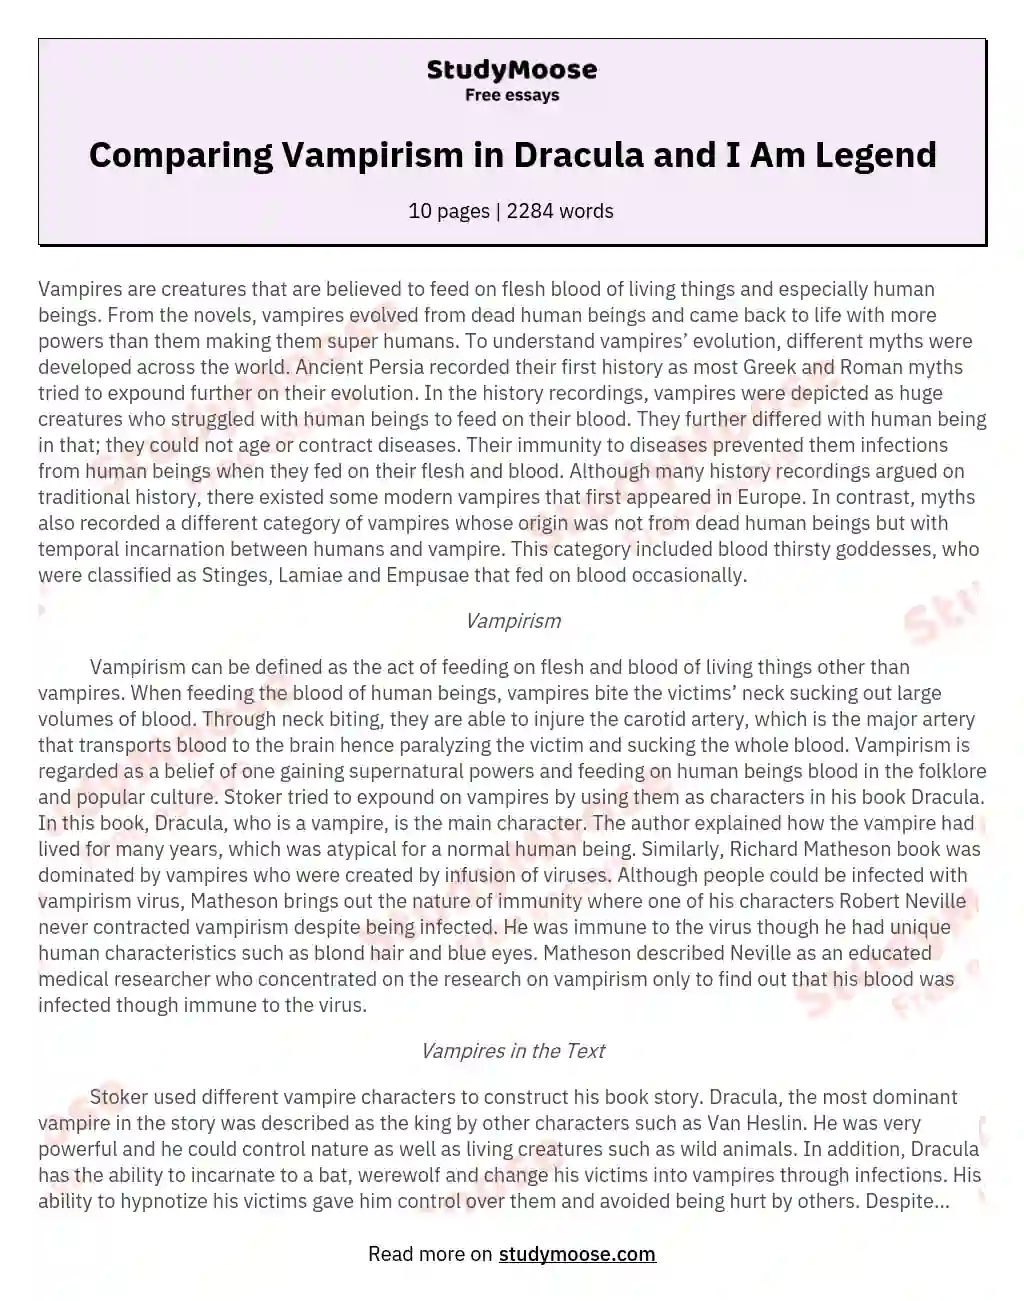 Comparing Vampirism in Dracula and I Am Legend essay